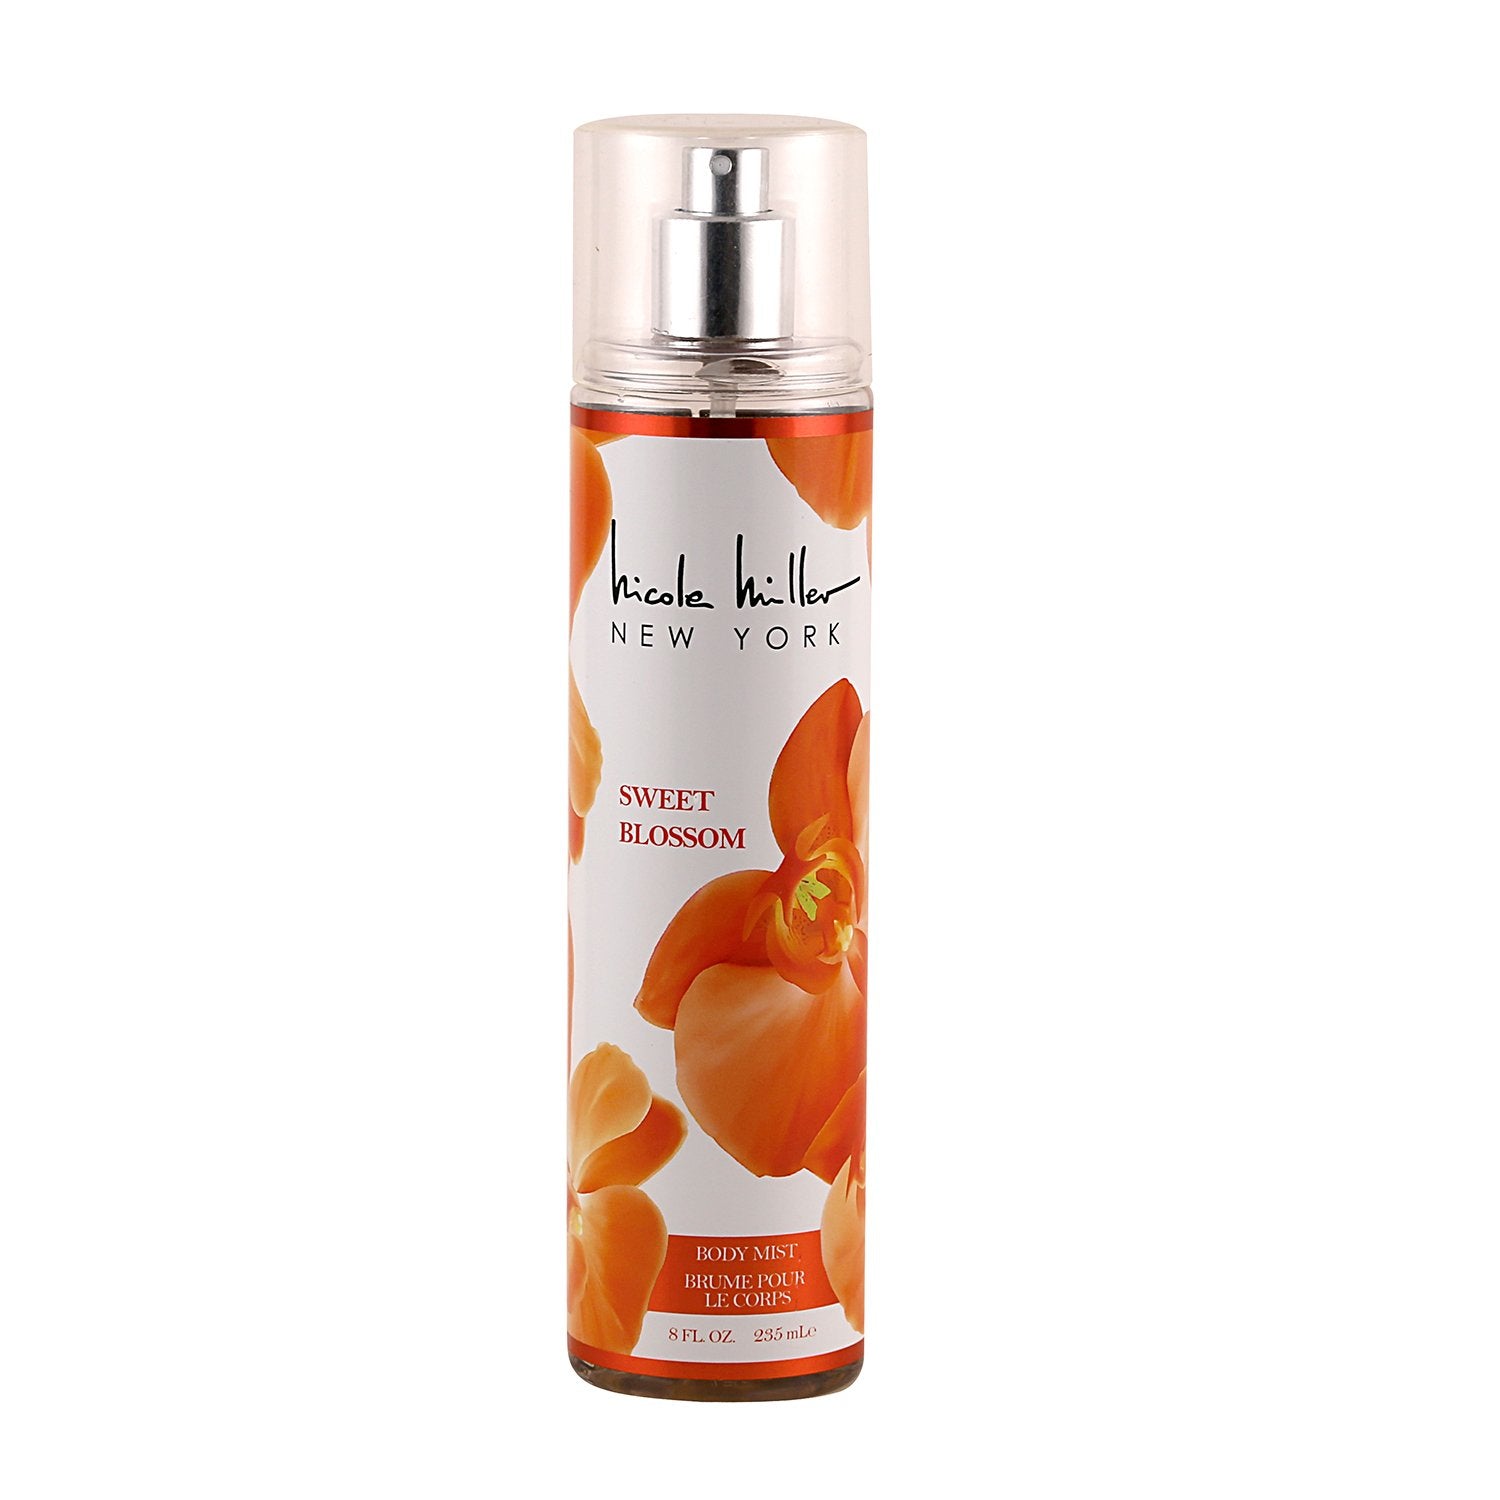 Perfume - NICOLE MILLER SWEET BLOSSOM FOR WOMEN - BODY SPRAY, 8.0 OZ